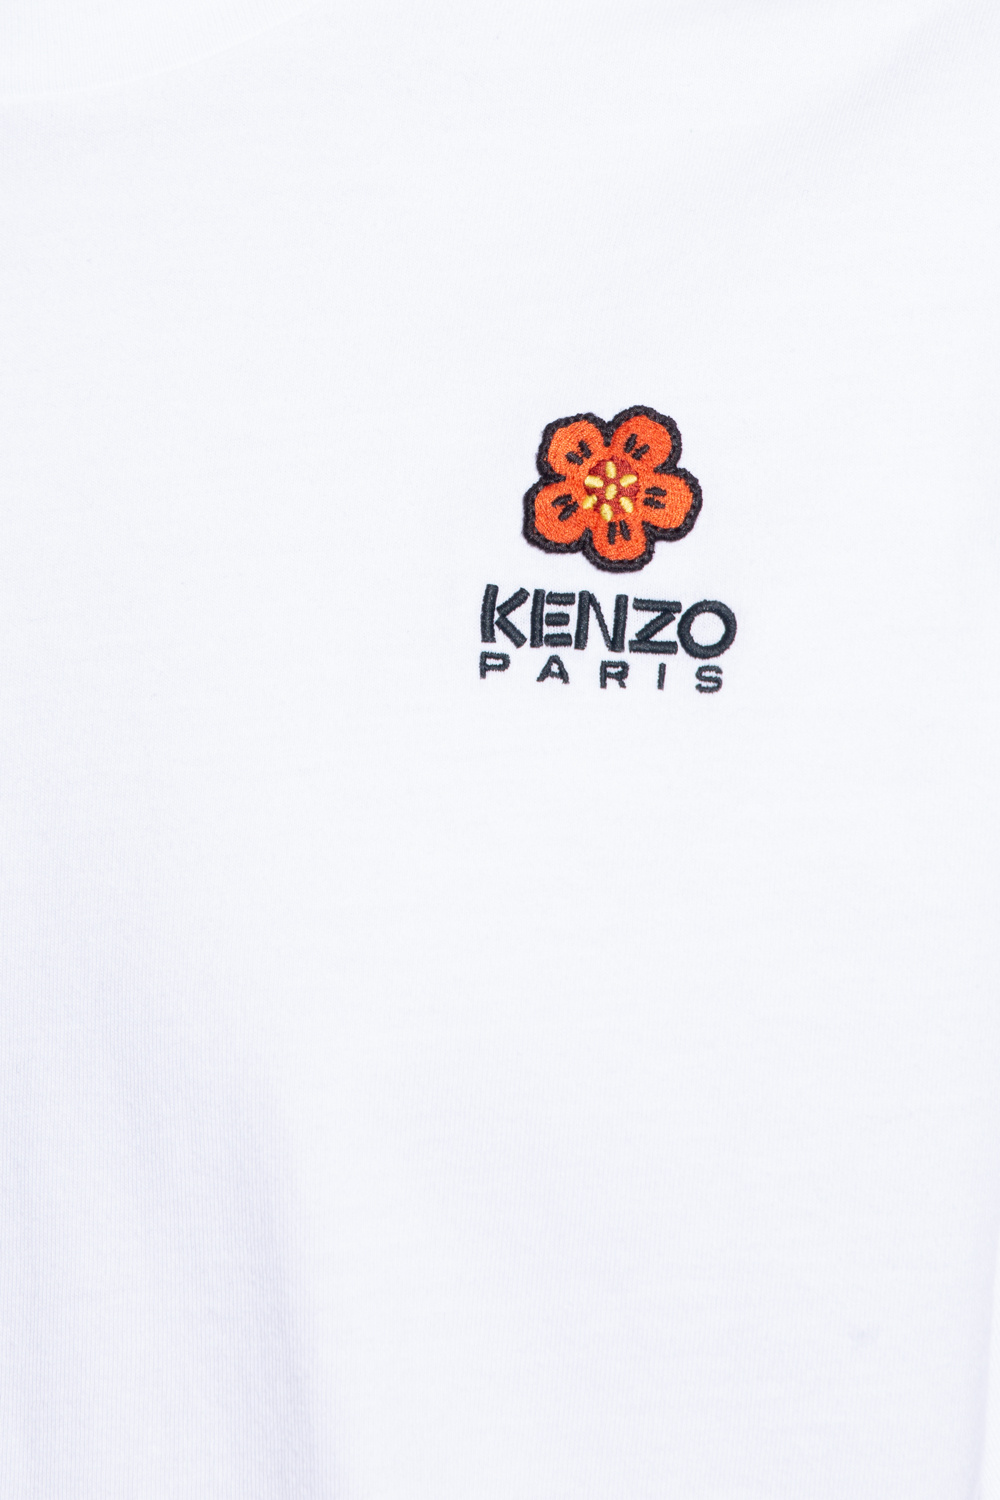 Kenzo womens scotch soda clothing